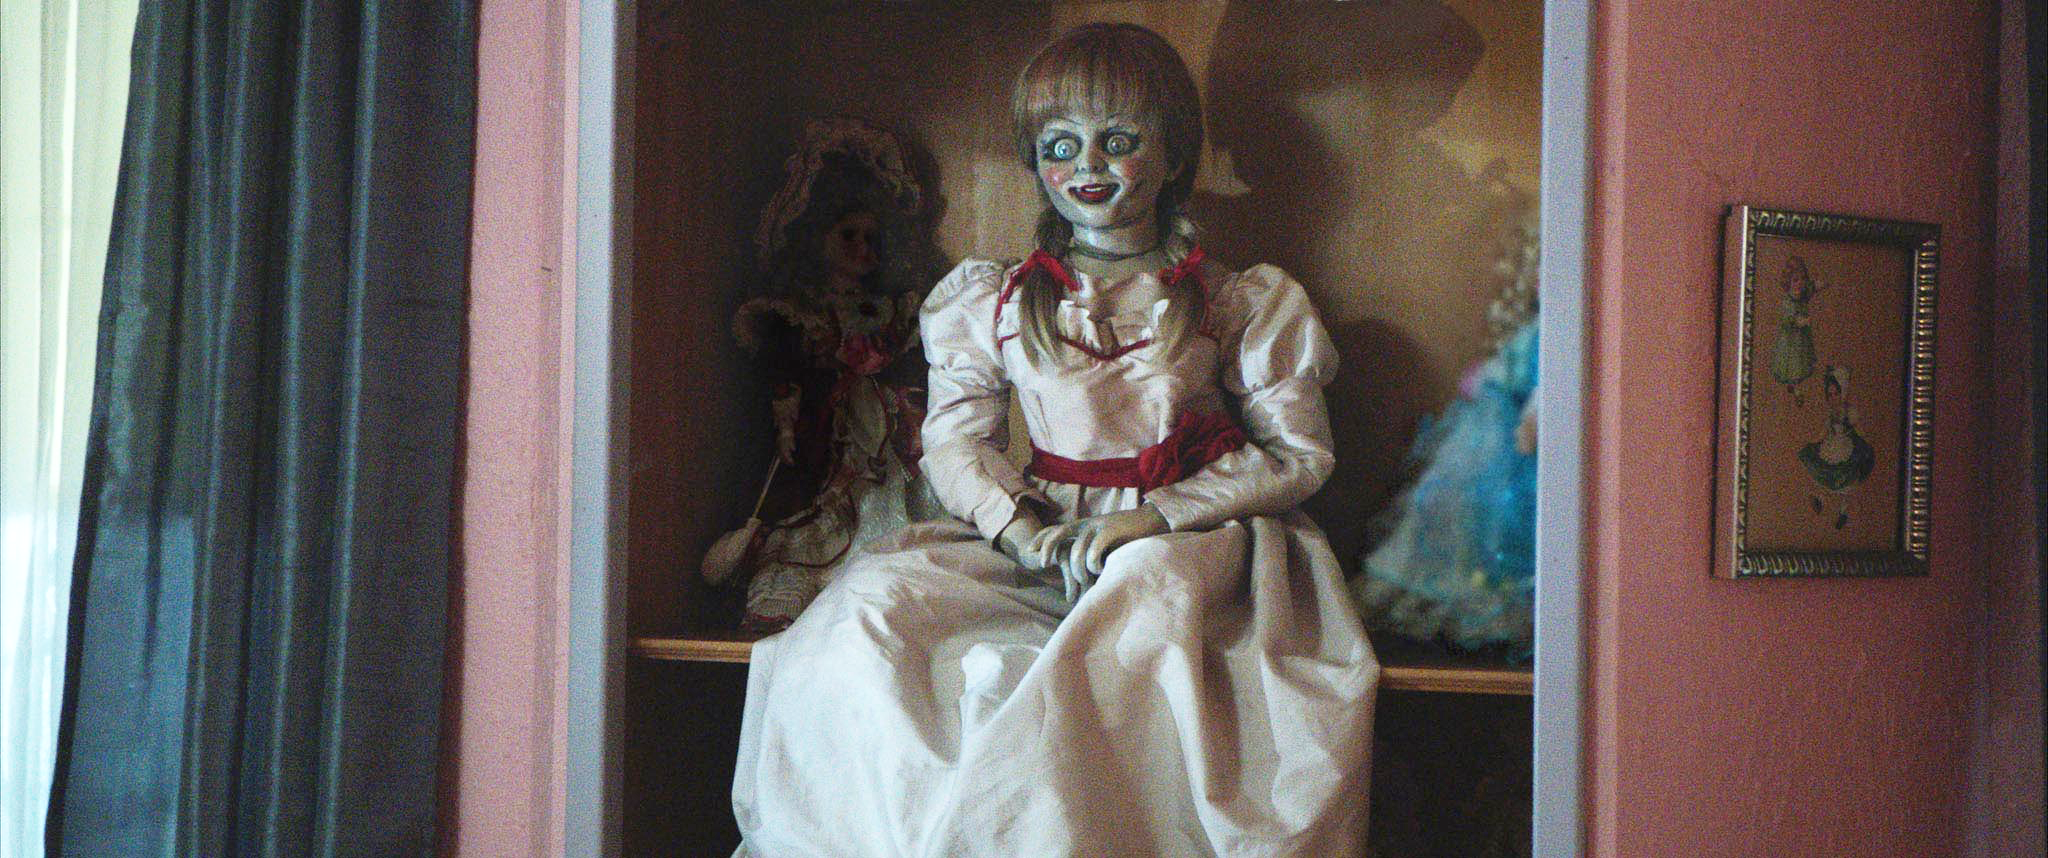 creepy glass dolls